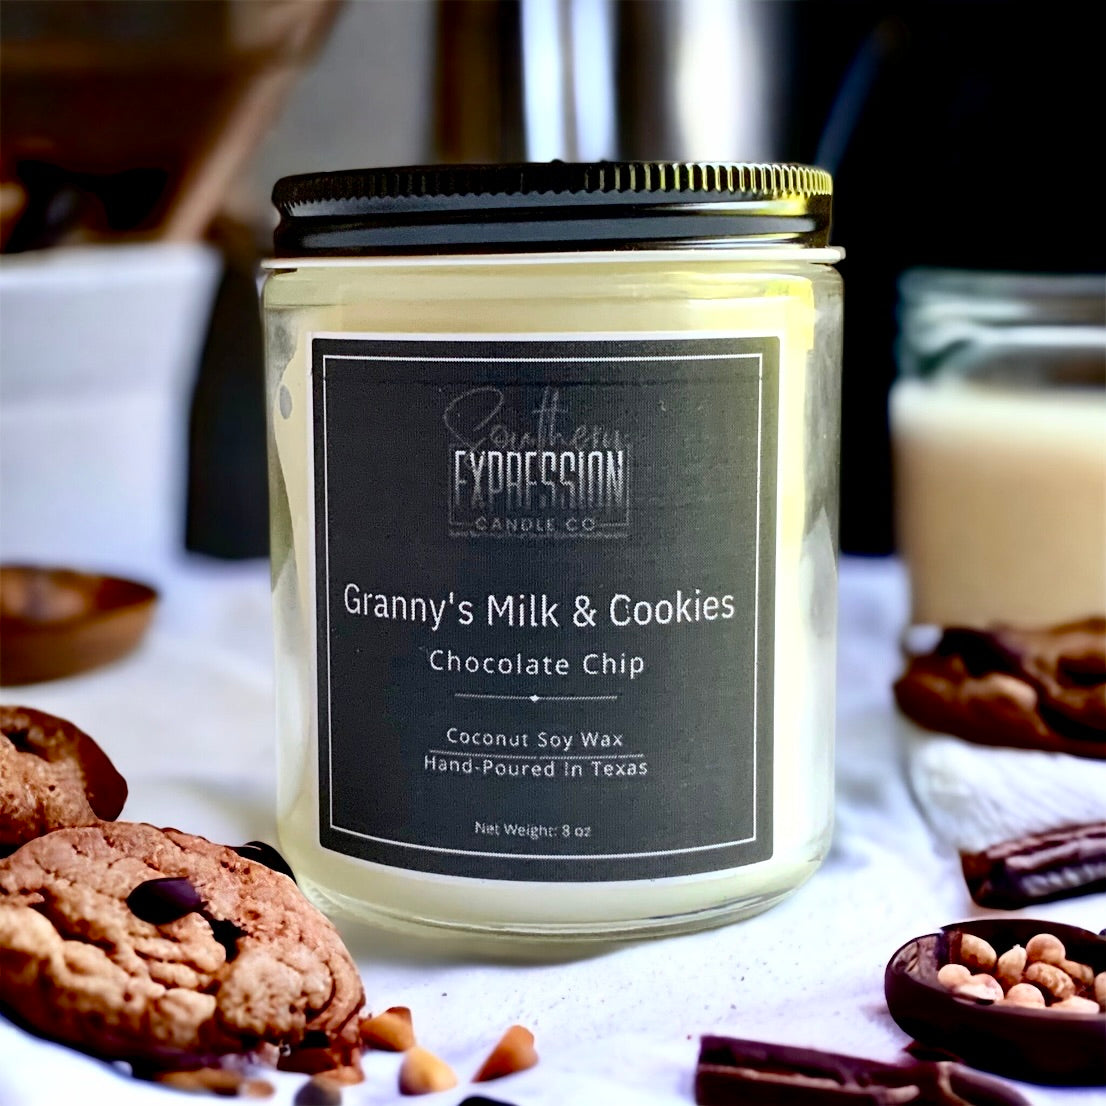 Granny’s Milk & Cookies